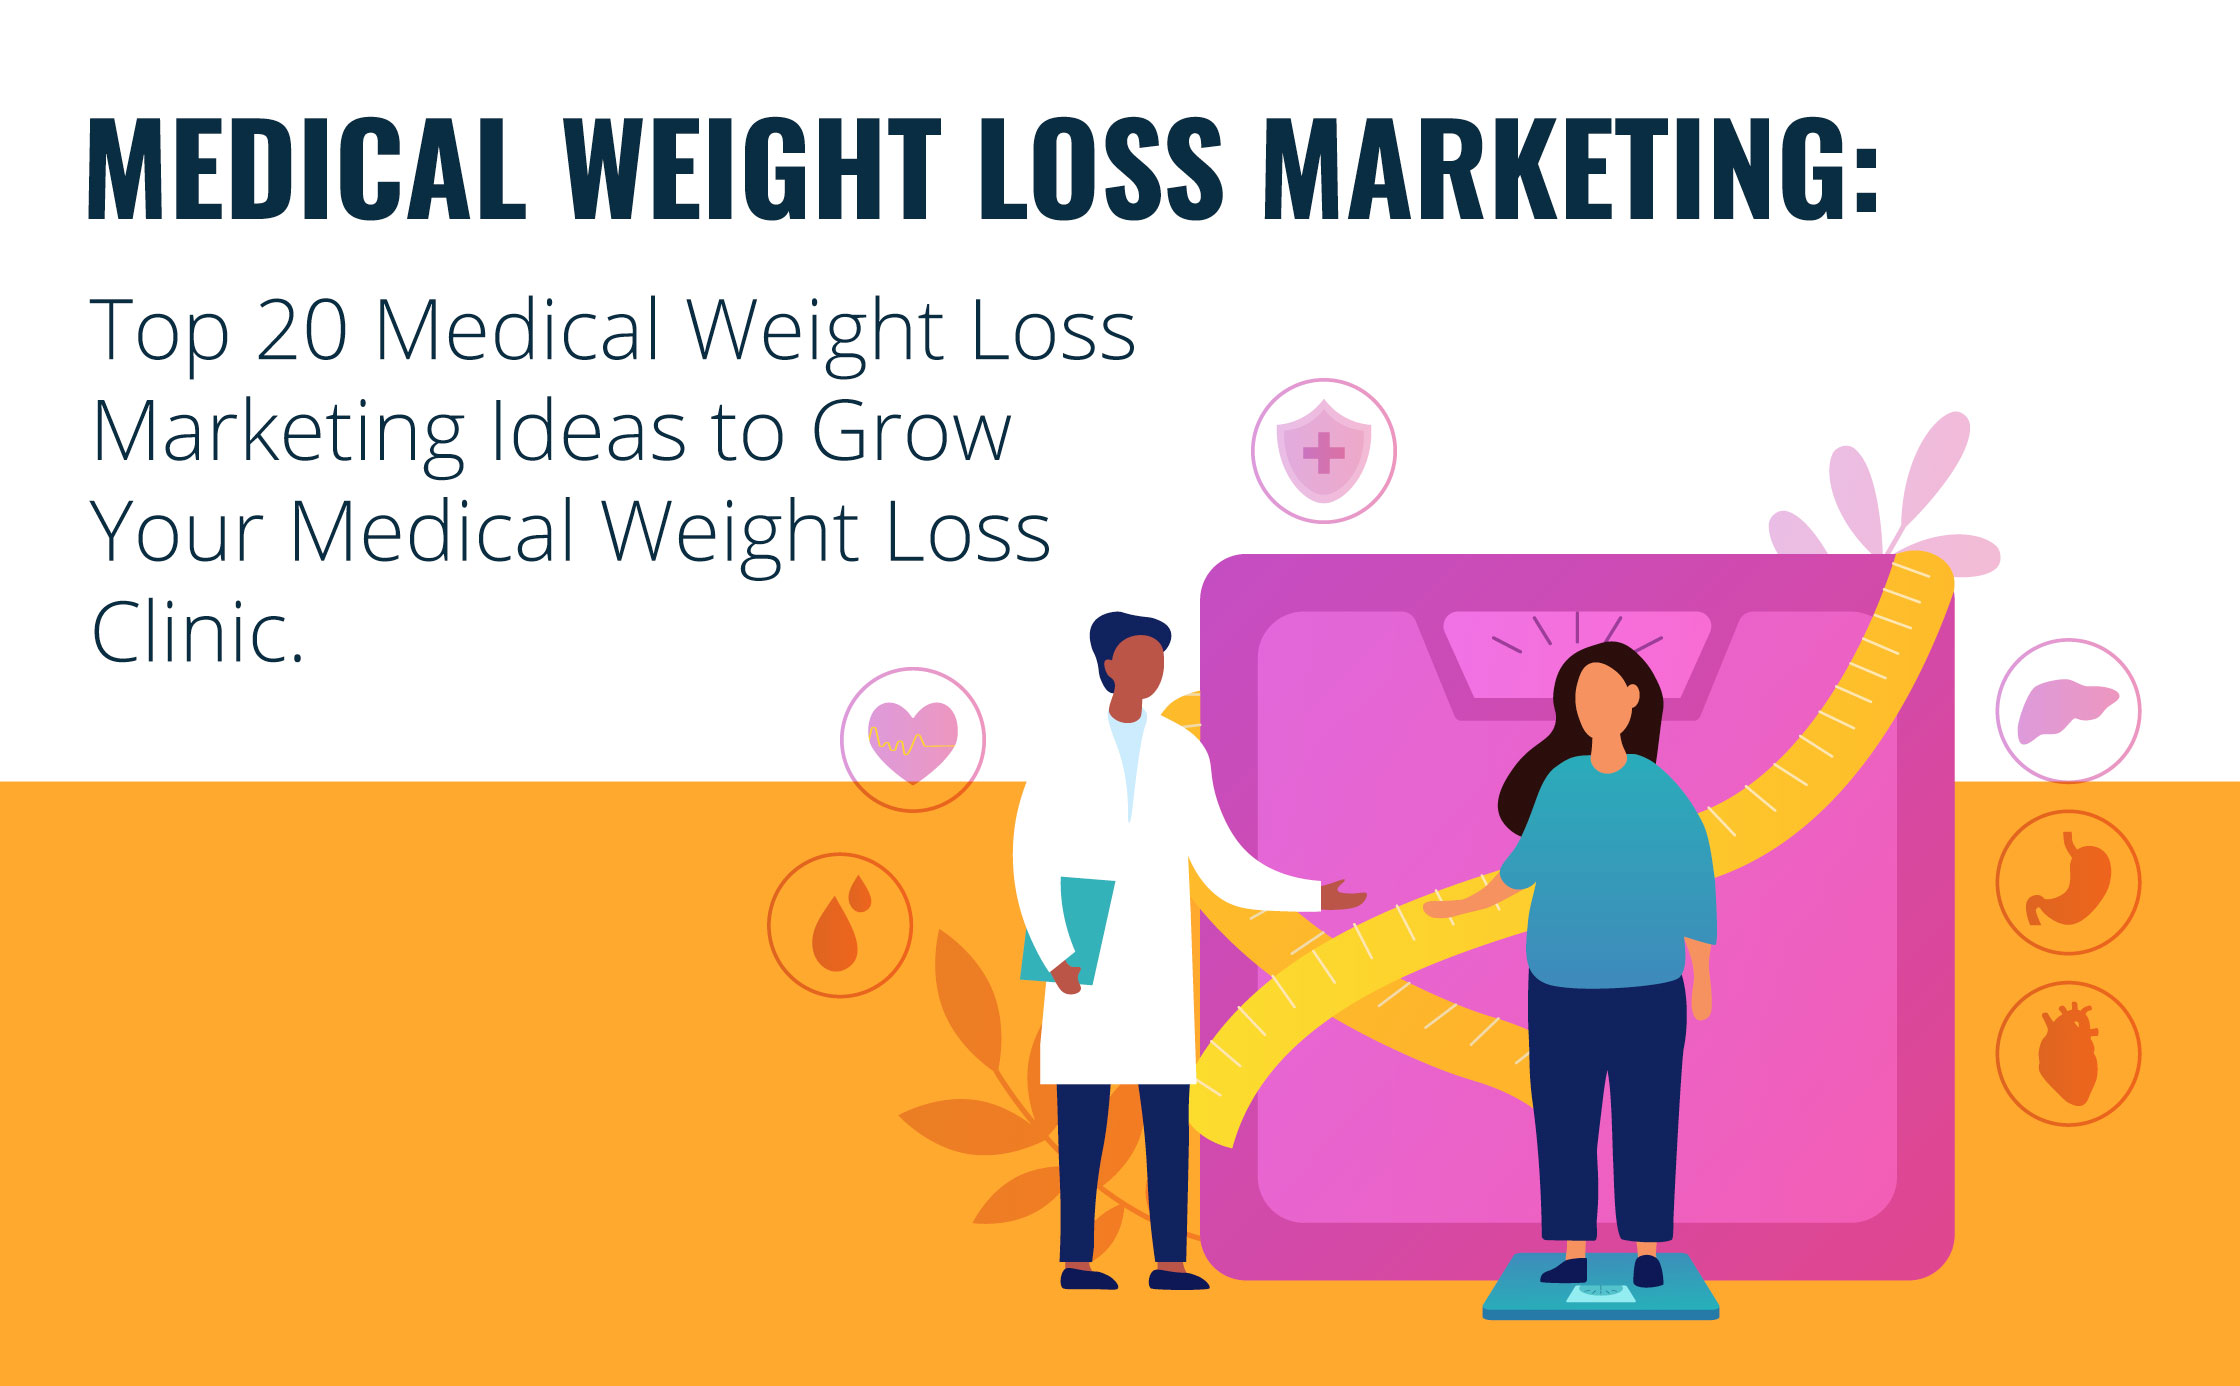 Medical Weight Loss Marketing: Top 20 Medical Weight Loss Marketing Ideas to Grow Your Medical Weight Loss Clinic